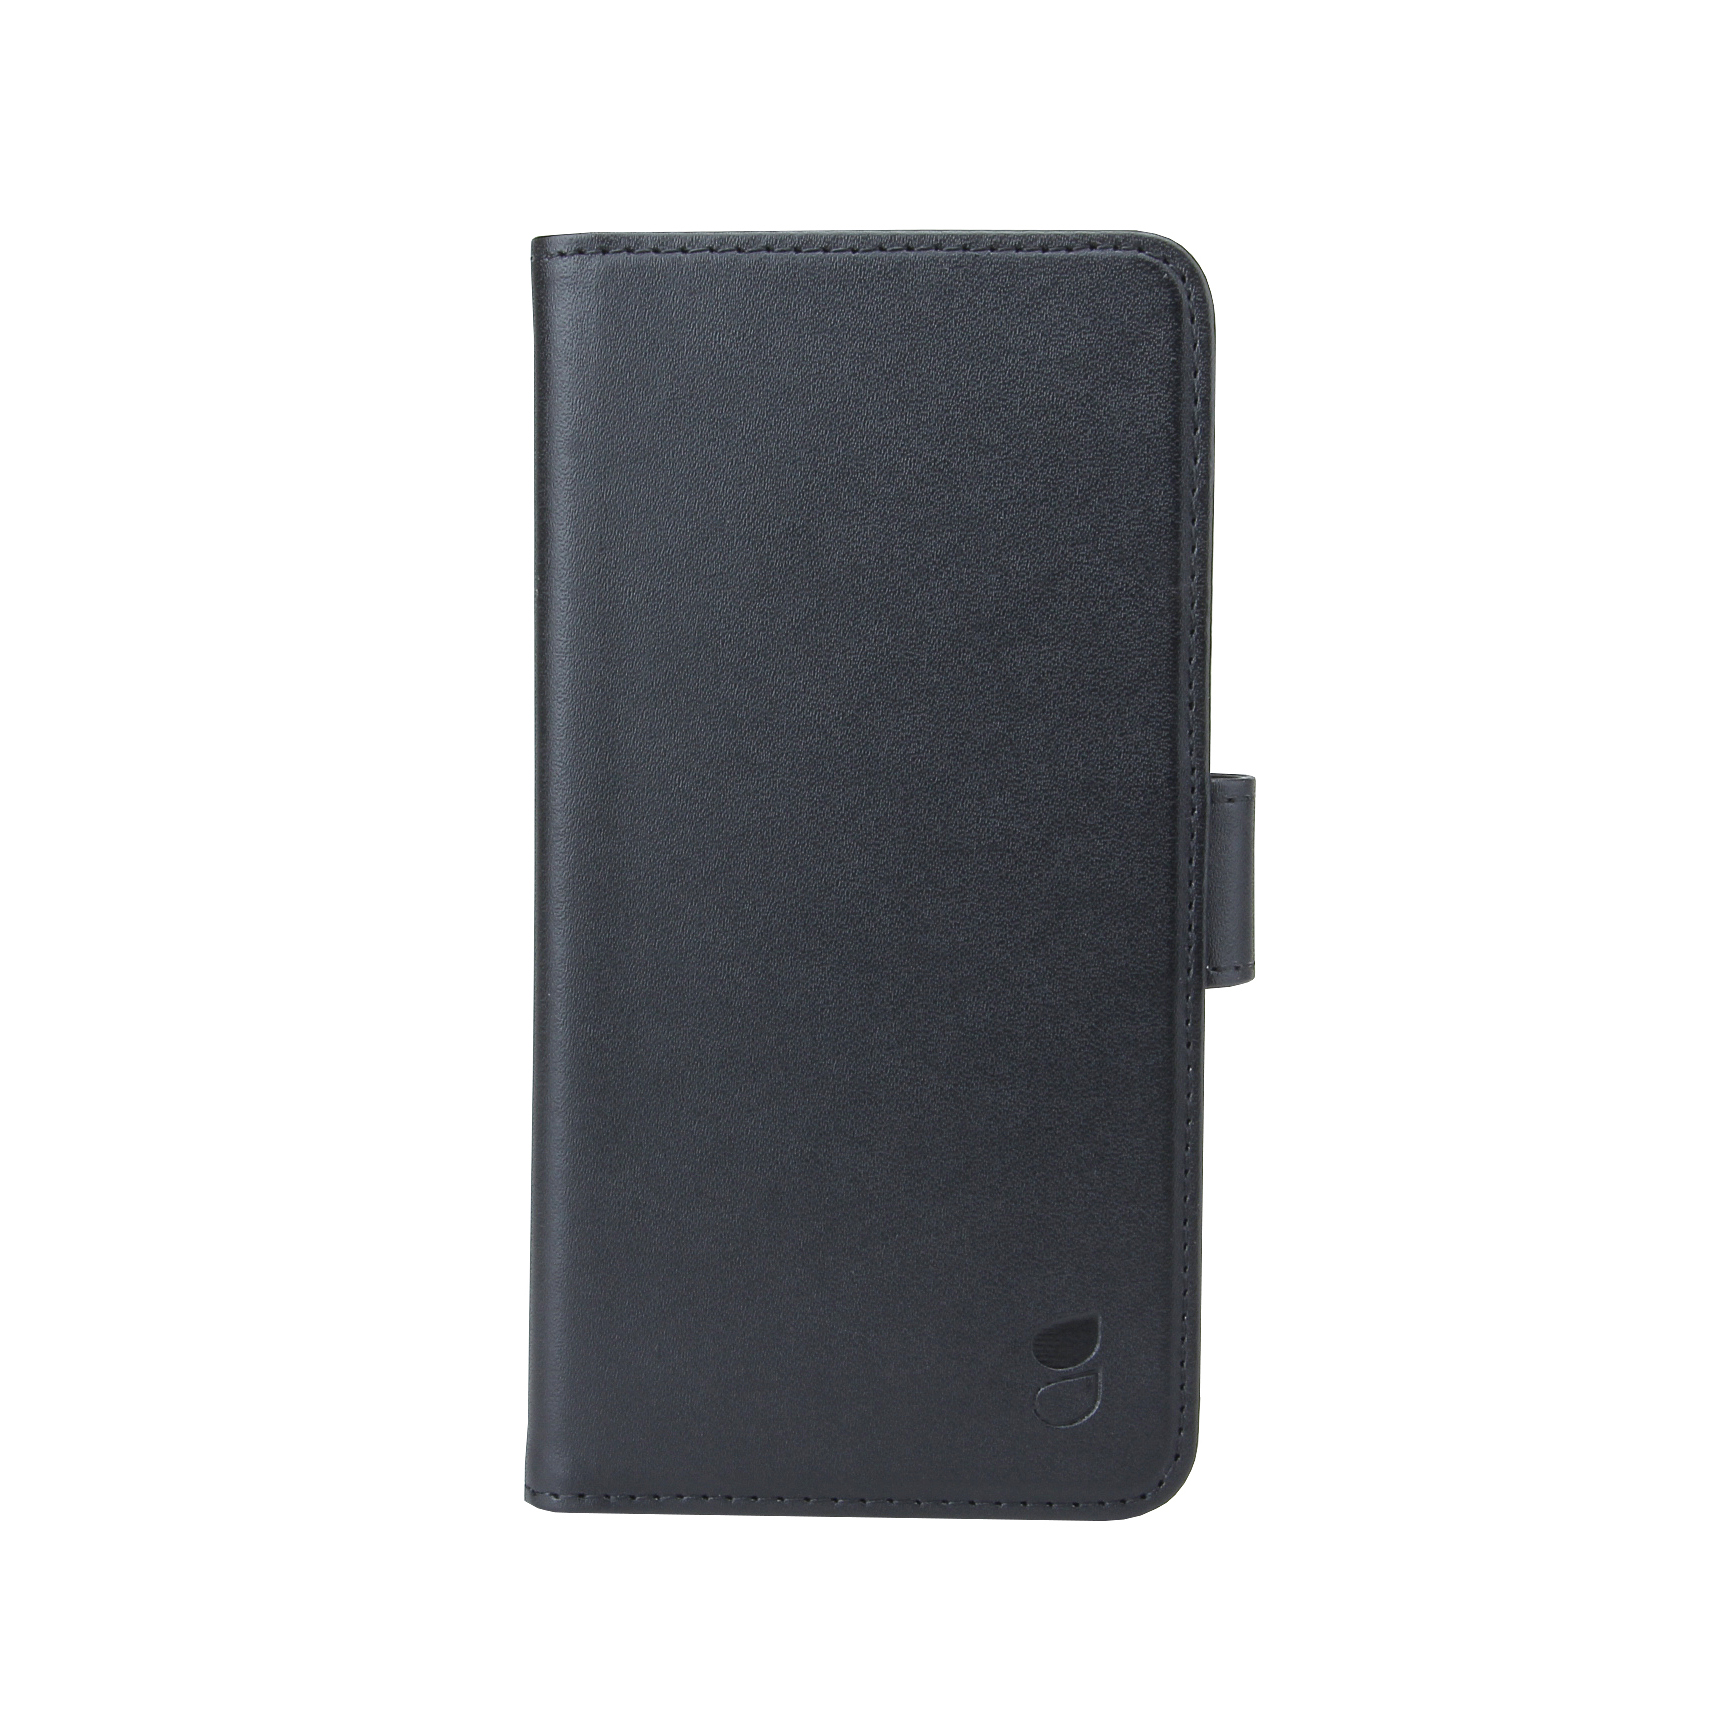 Wallet Case Black - iPhone XS Max 